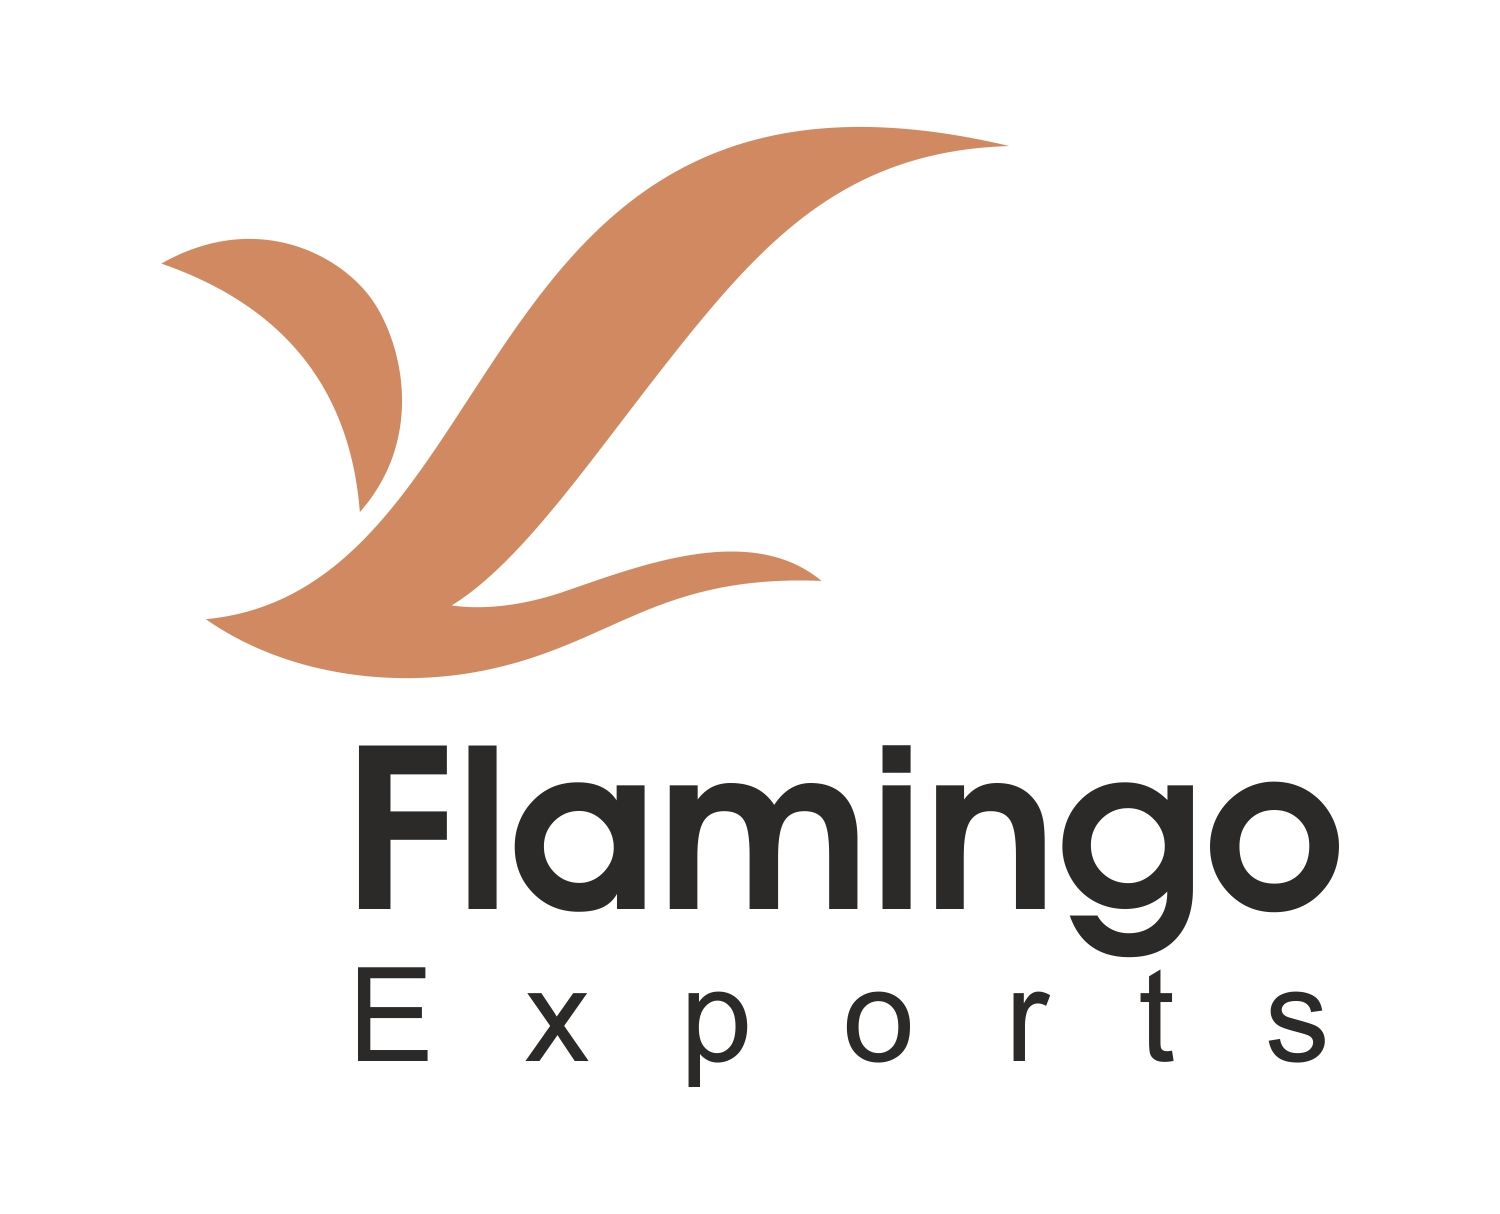 FLAMINGO EXPORTS